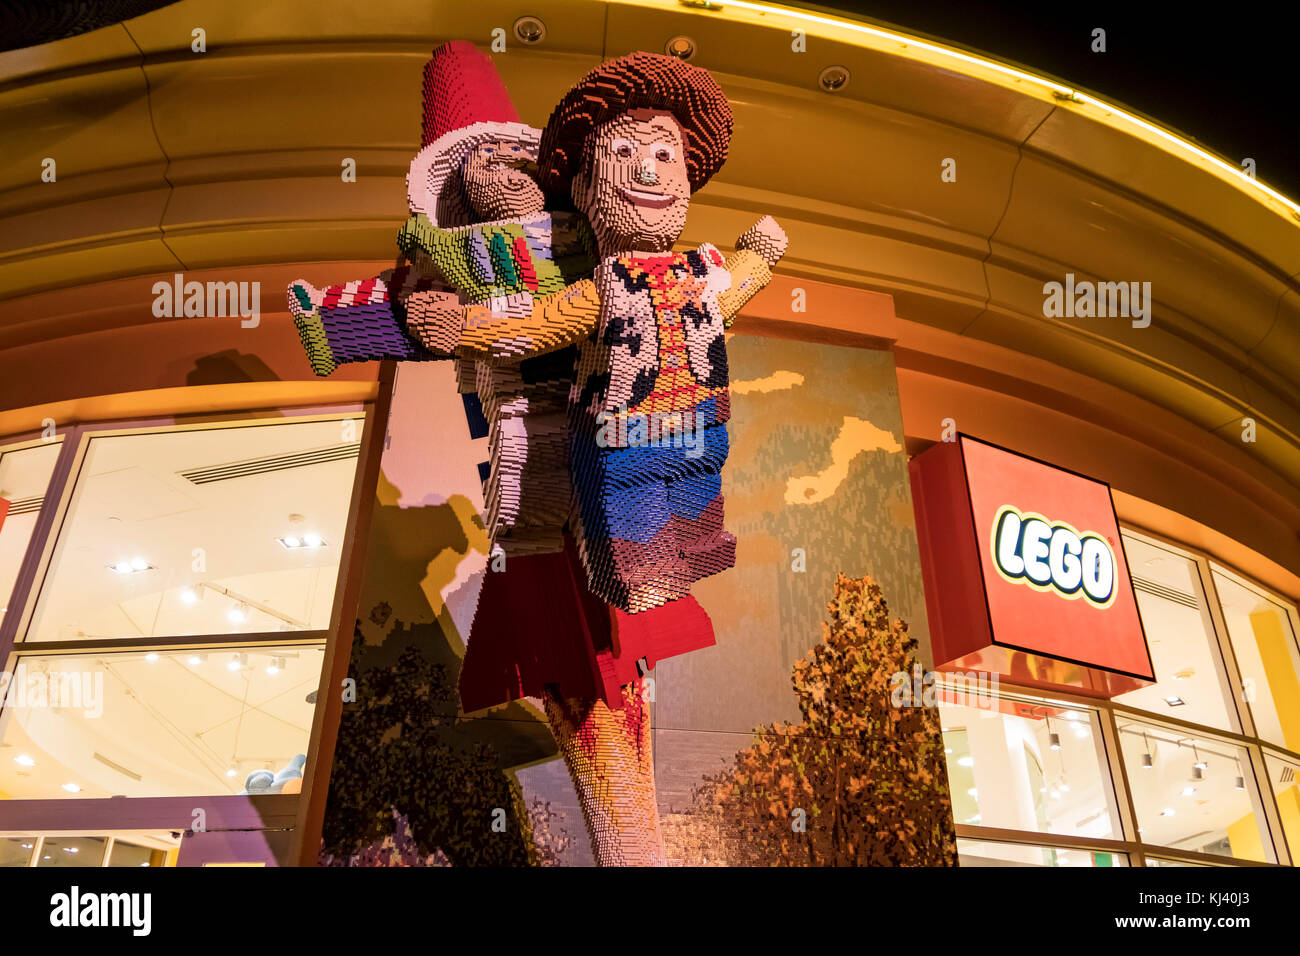 Anaheim, NOV 11: Woody toy story lego statue in the famous Downtown Disney District, Disneyland Resort on NOV 11, 2017 at Anaheim, Orange County, Cali Stock Photo